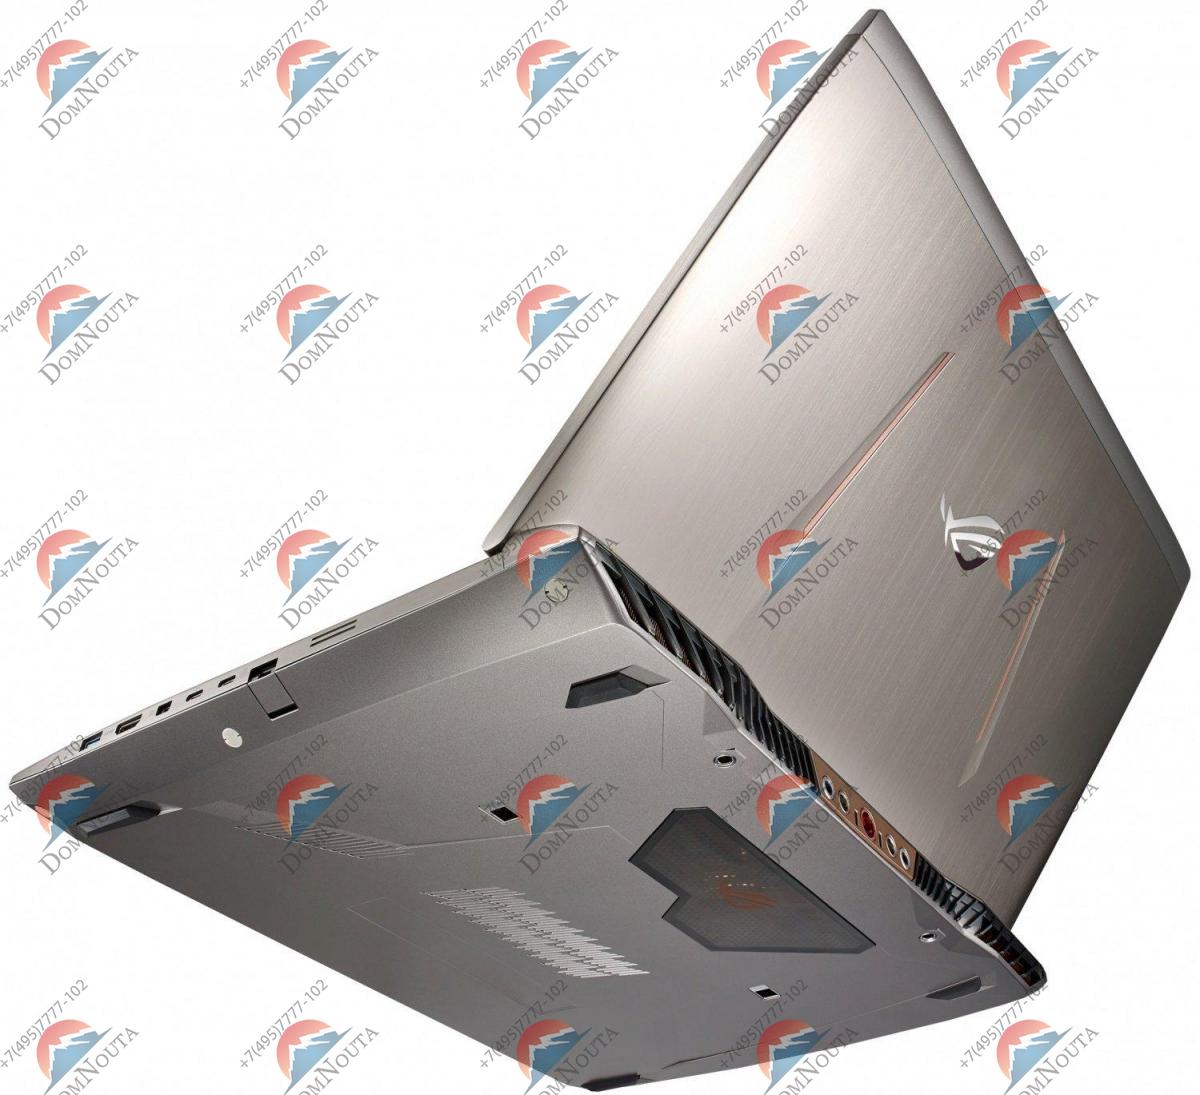 Ноутбук Asus GX700Vo